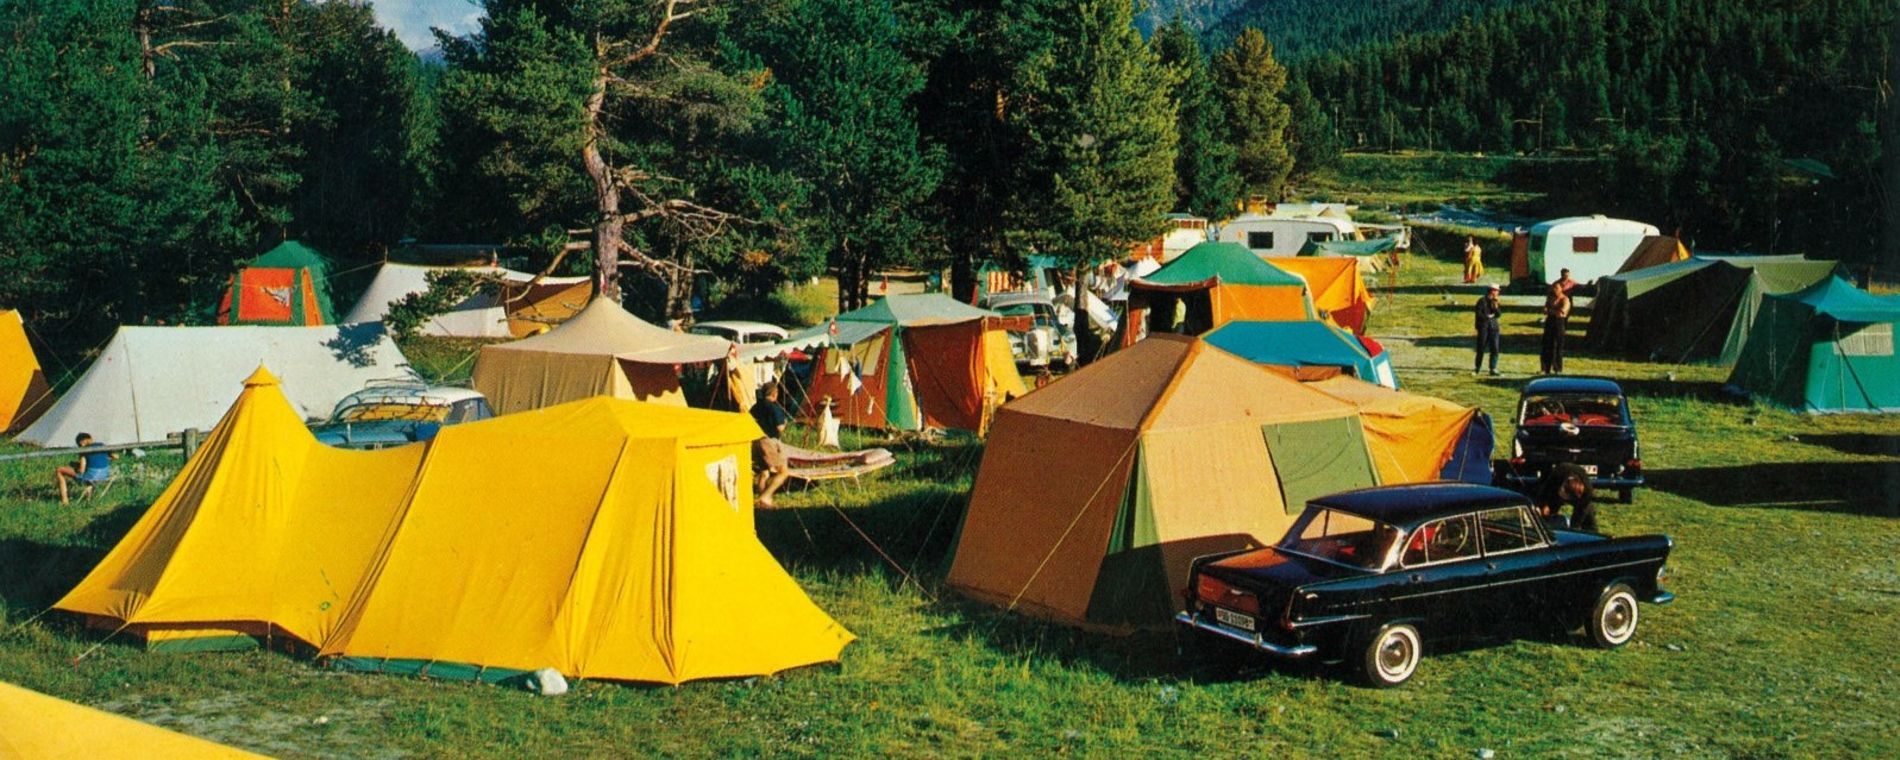 75 Jahre Jubiläum TCS Camping